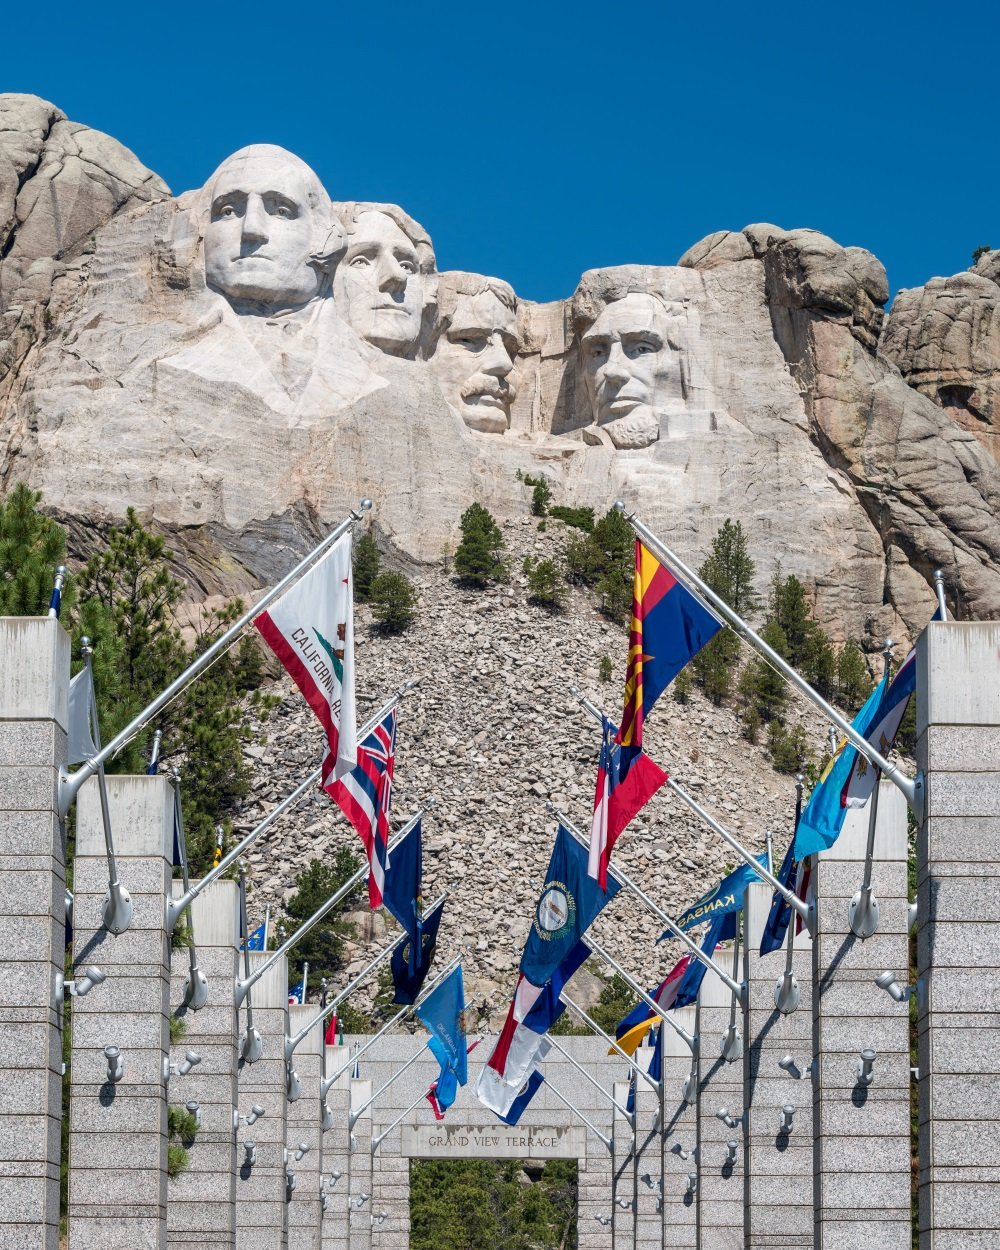 USA-Dakota_Mount Rushmore National Monument-1000